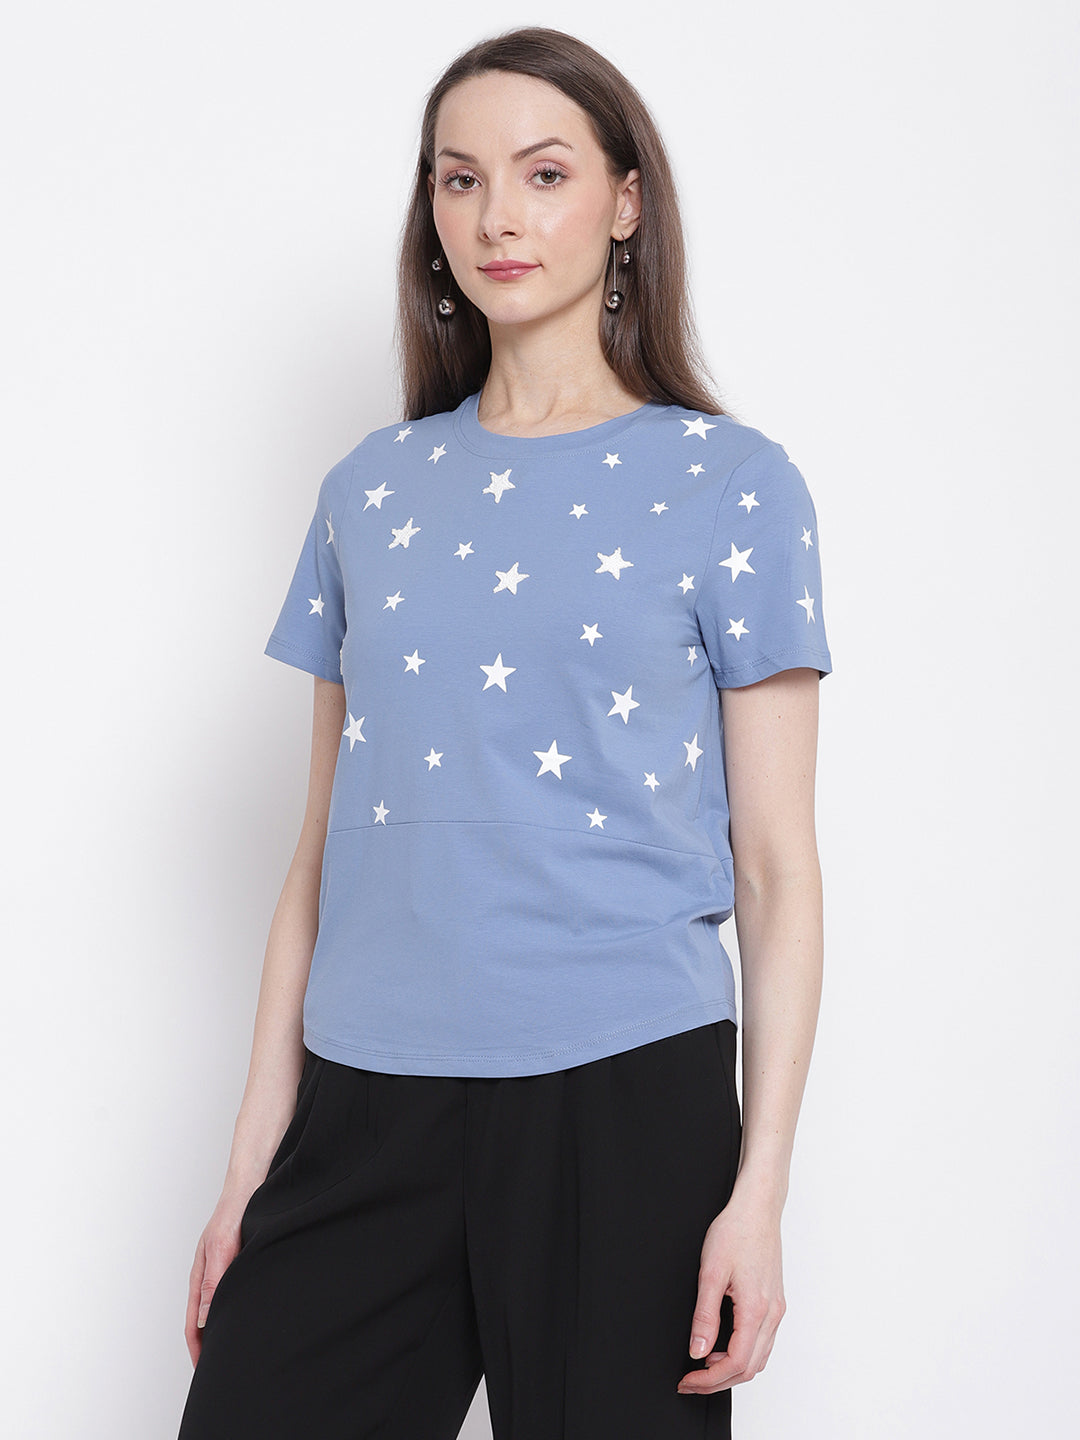 Women Stars Printed Blue Top